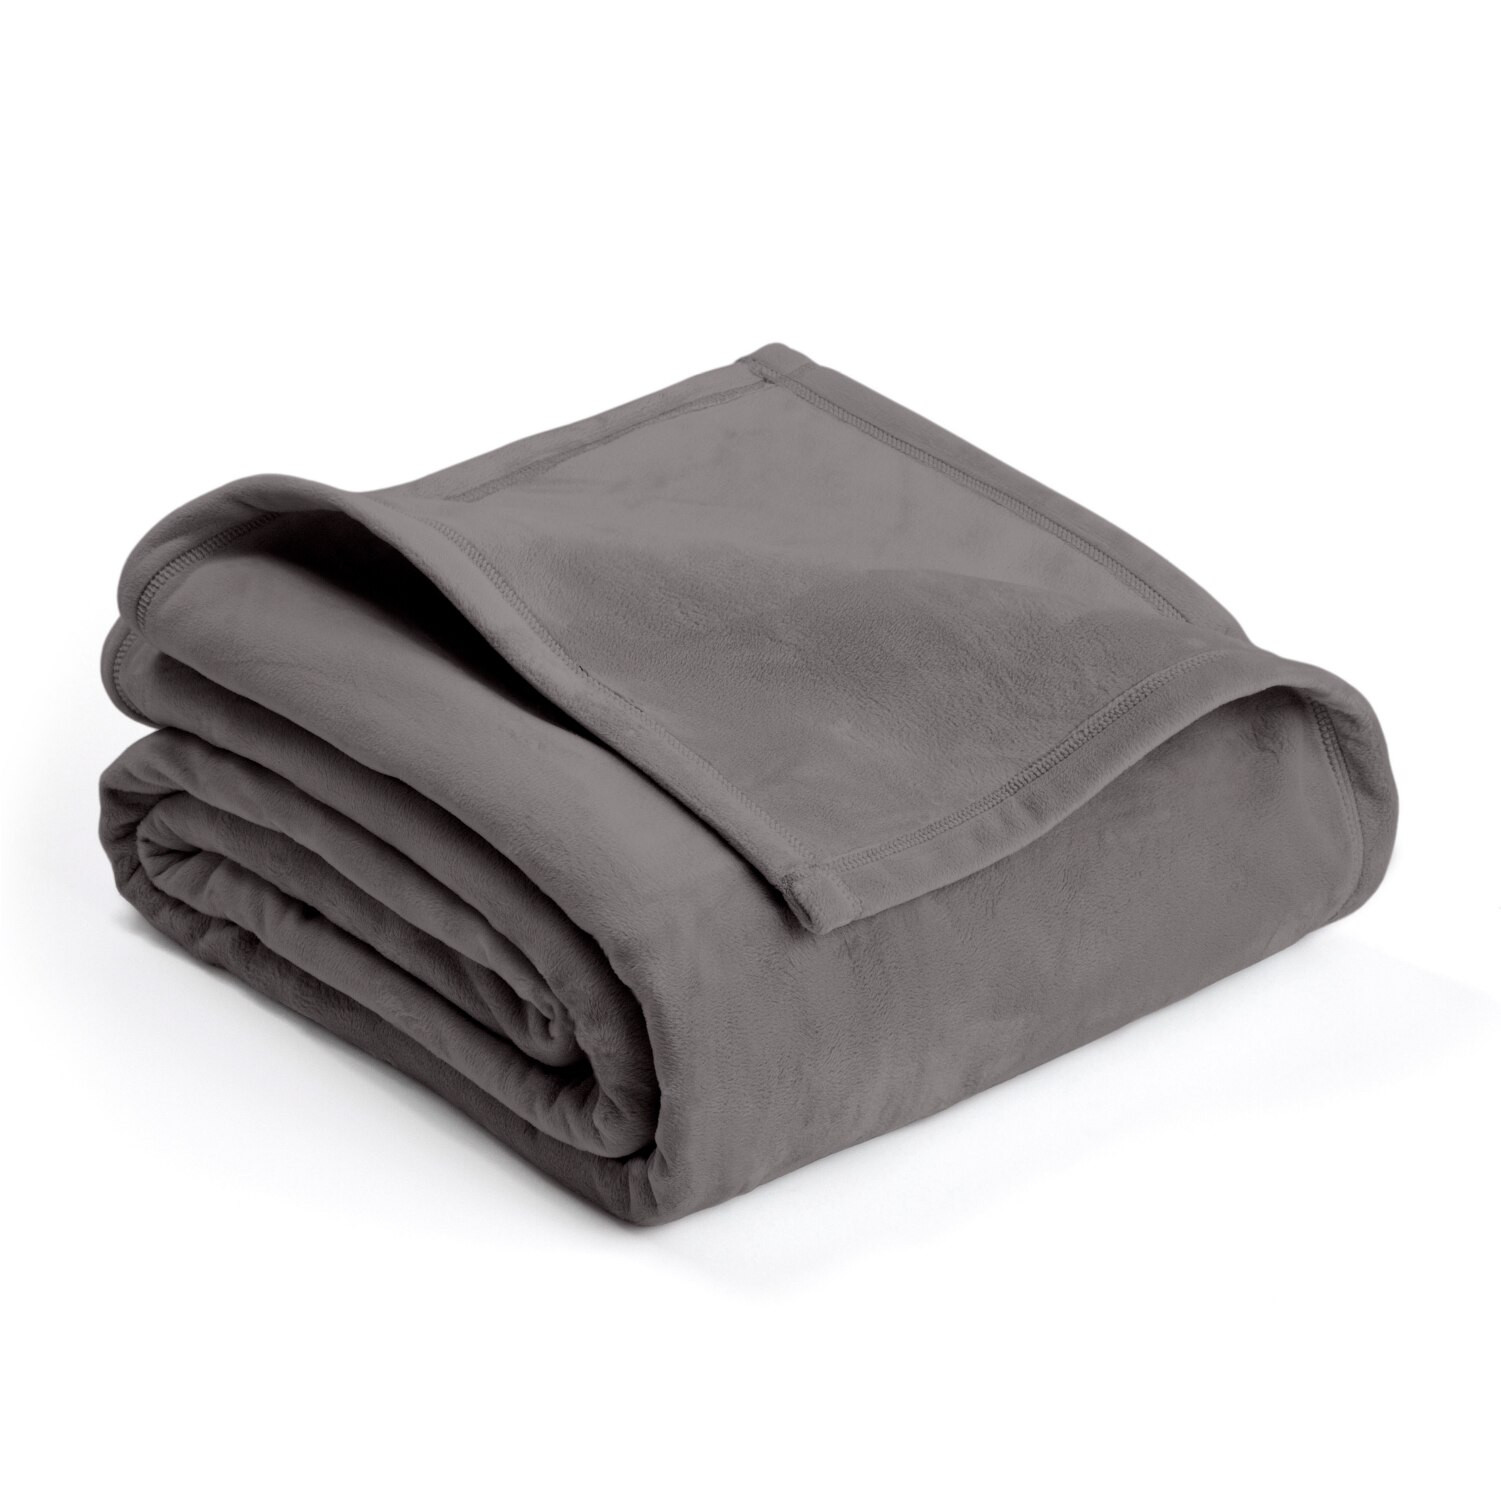 Vellux(R) Twin Plush Blanket